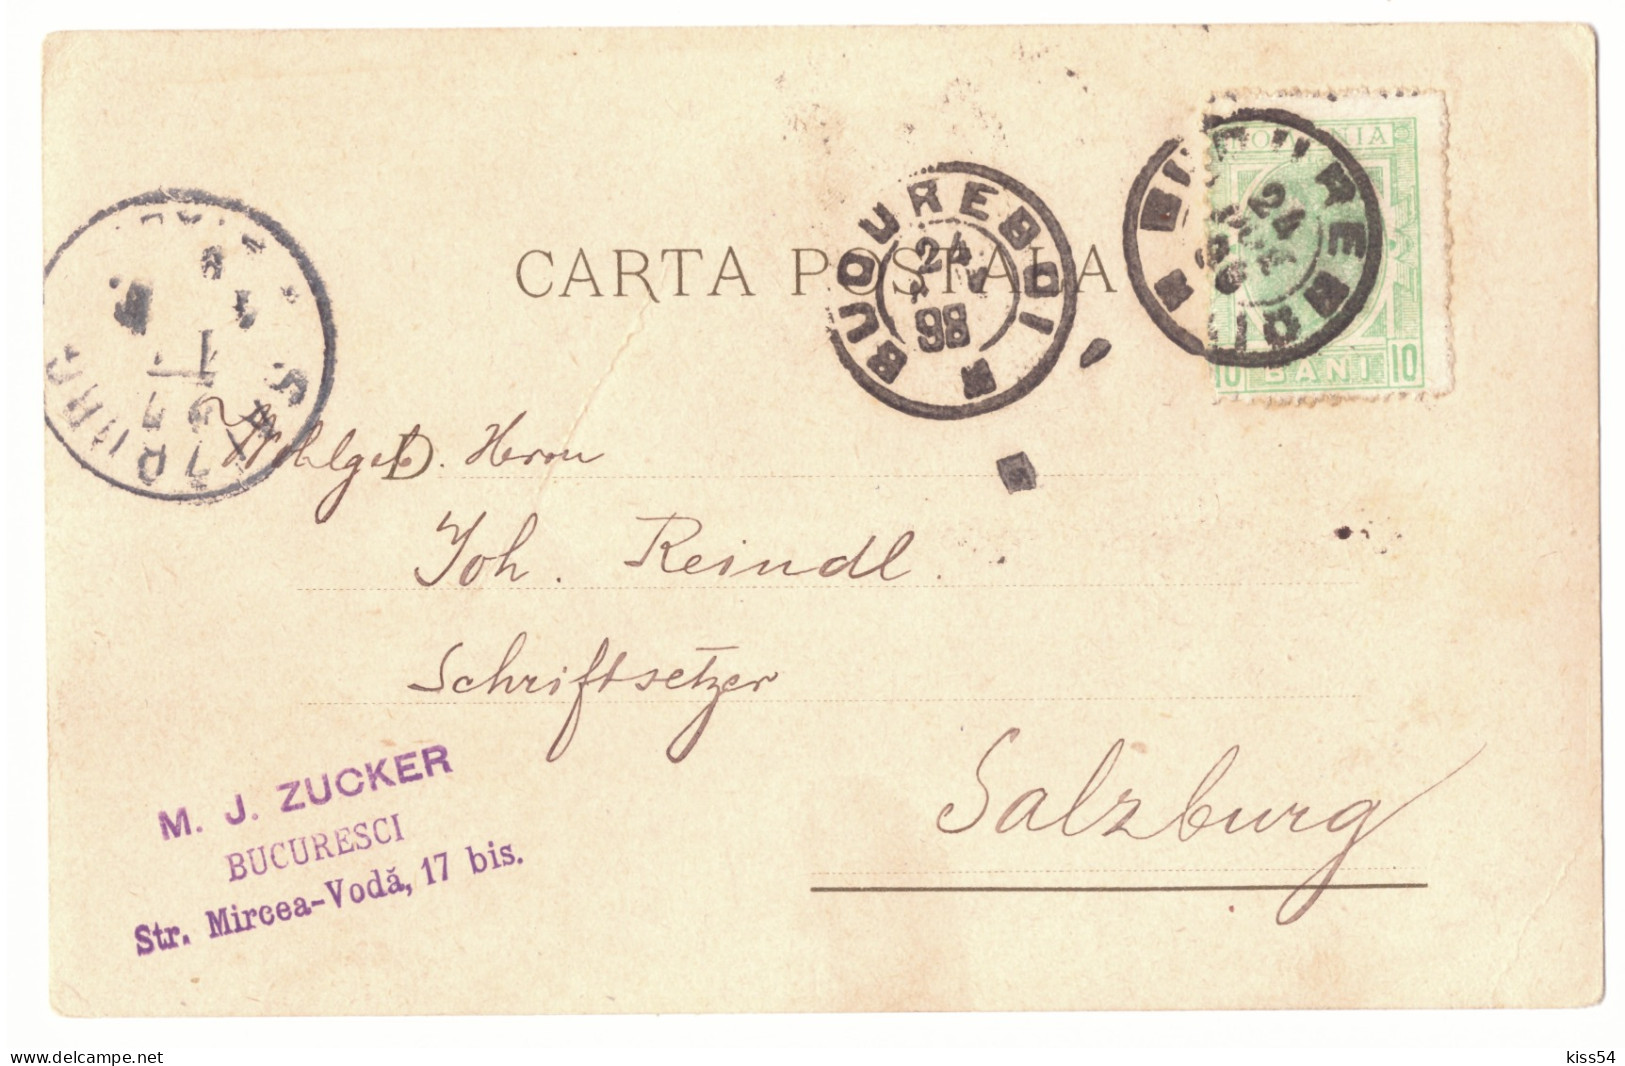 RO 40 - 19196 SINAIA, Litho, Romania - Old Postcard - Used - 1898 - Rumänien